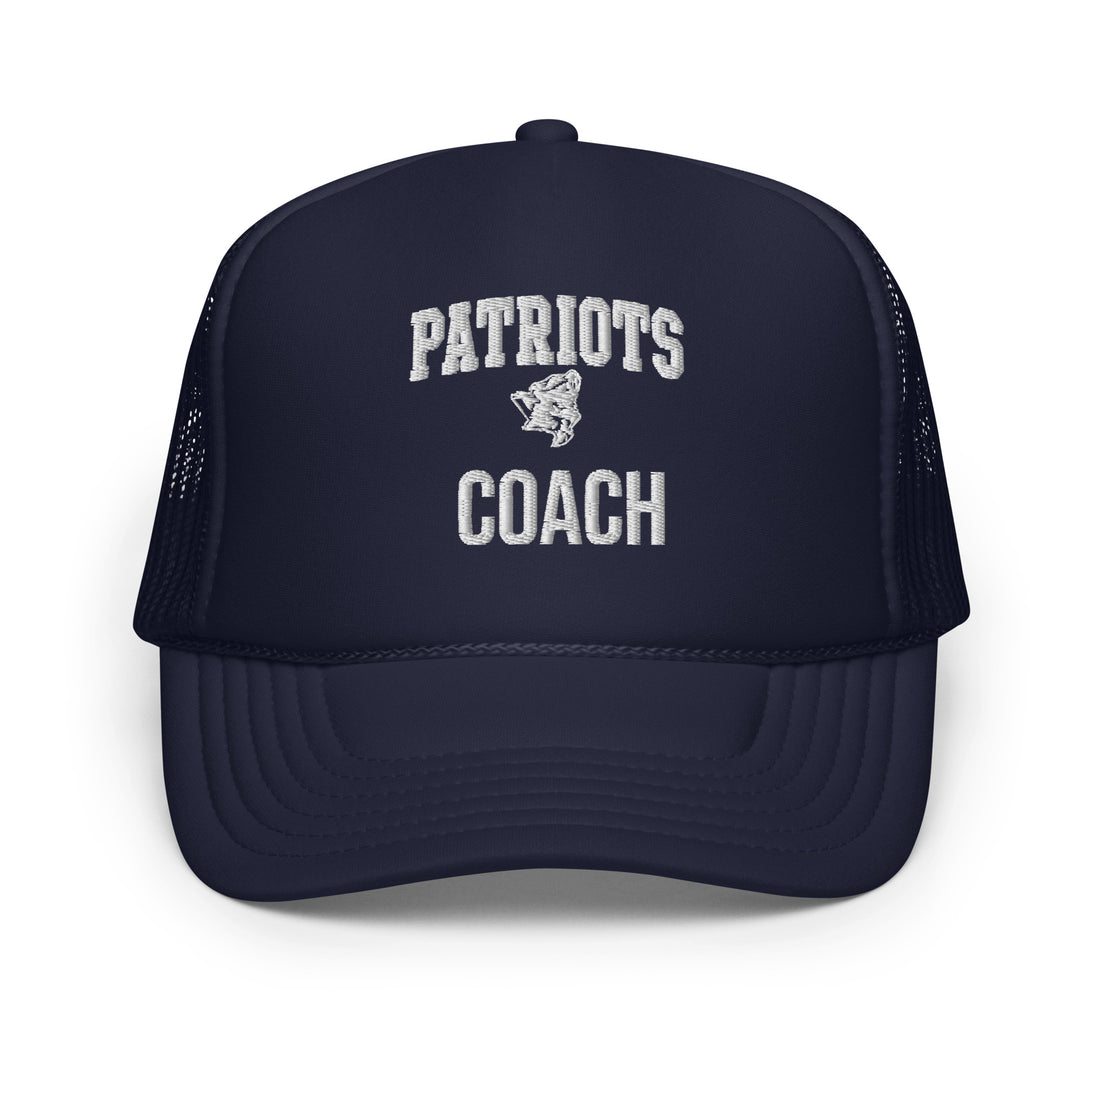 Coach  trucker hat